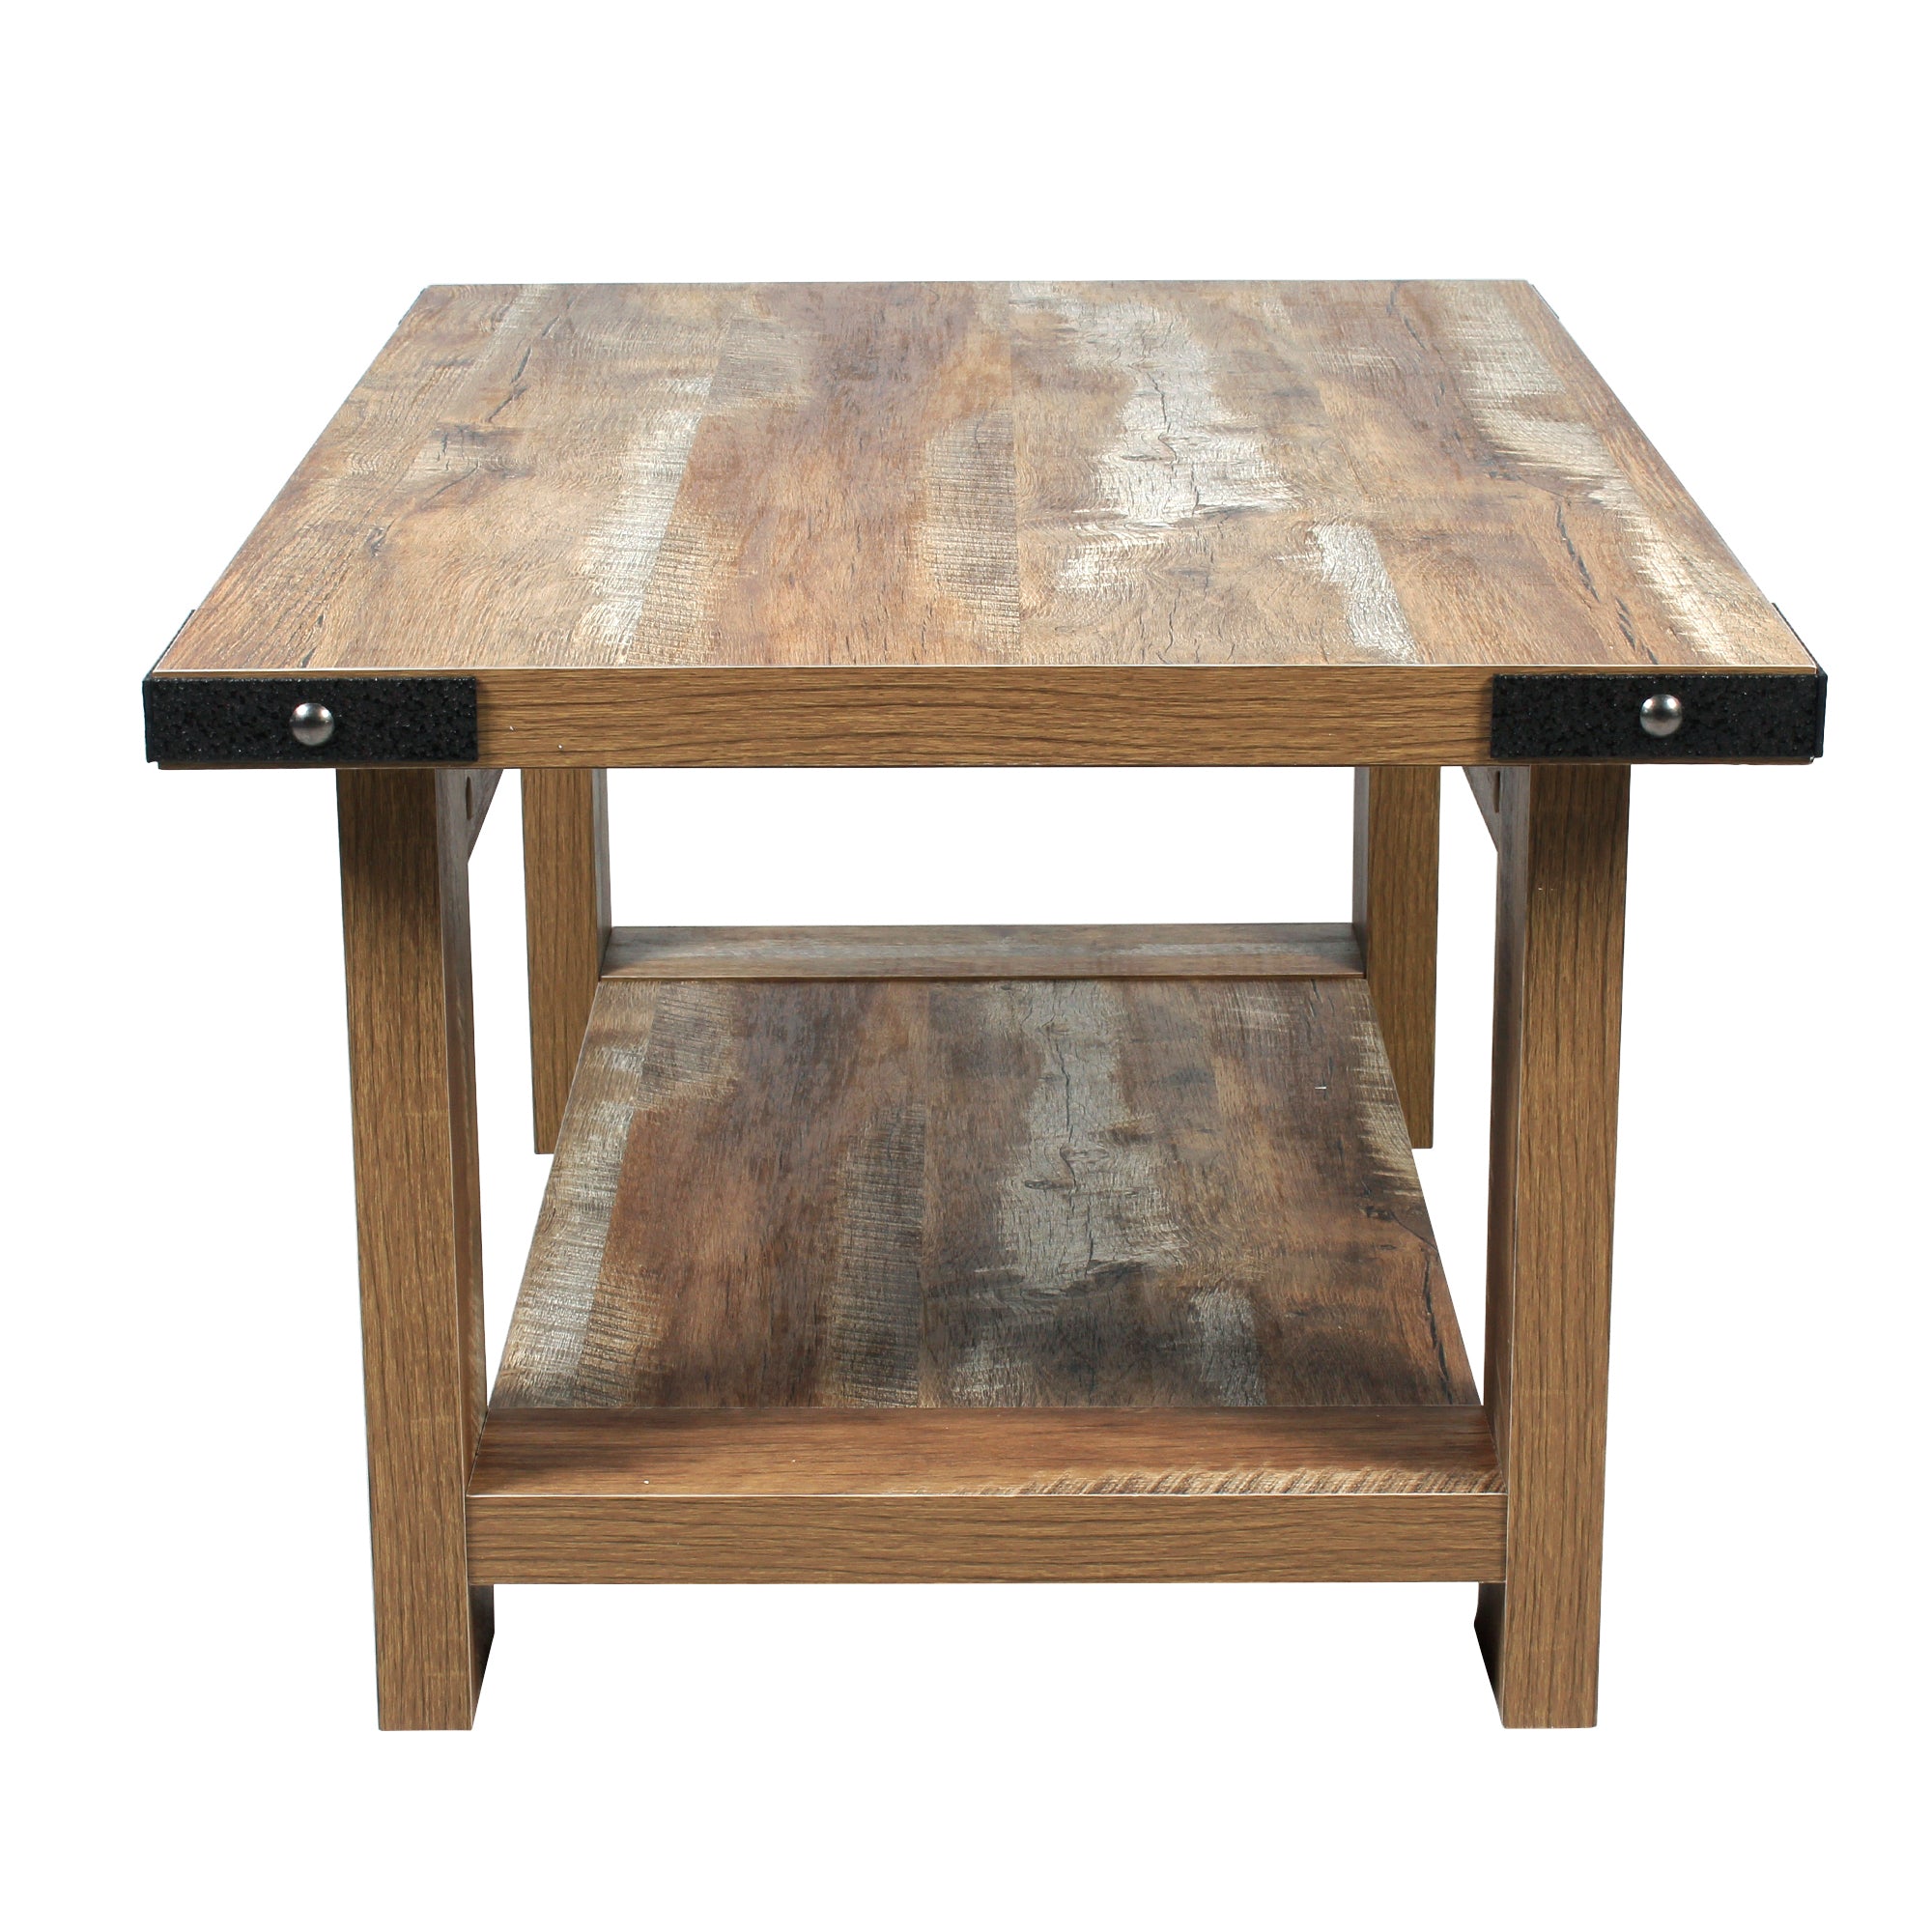 Lazywud Coffee Table For Living Room (Yukon Oak)